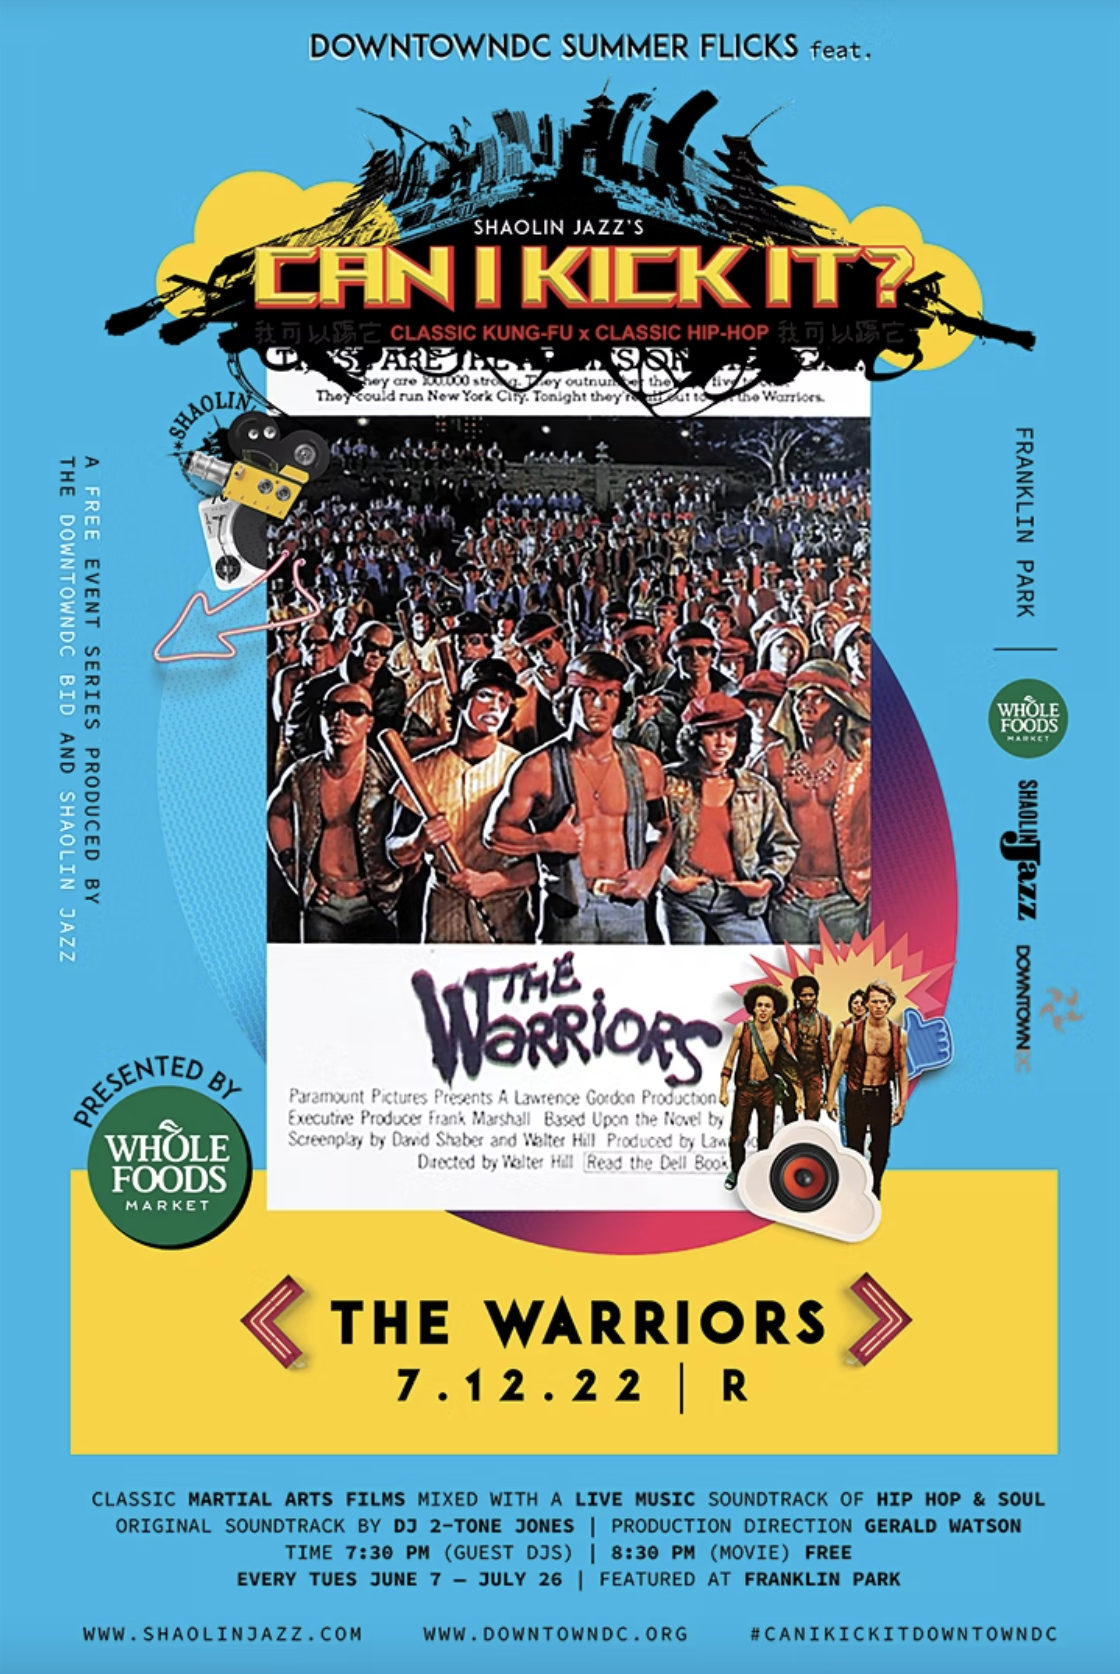 CAN I KICK IT? Downtown DC Summer Flicks presents “The Warriors”